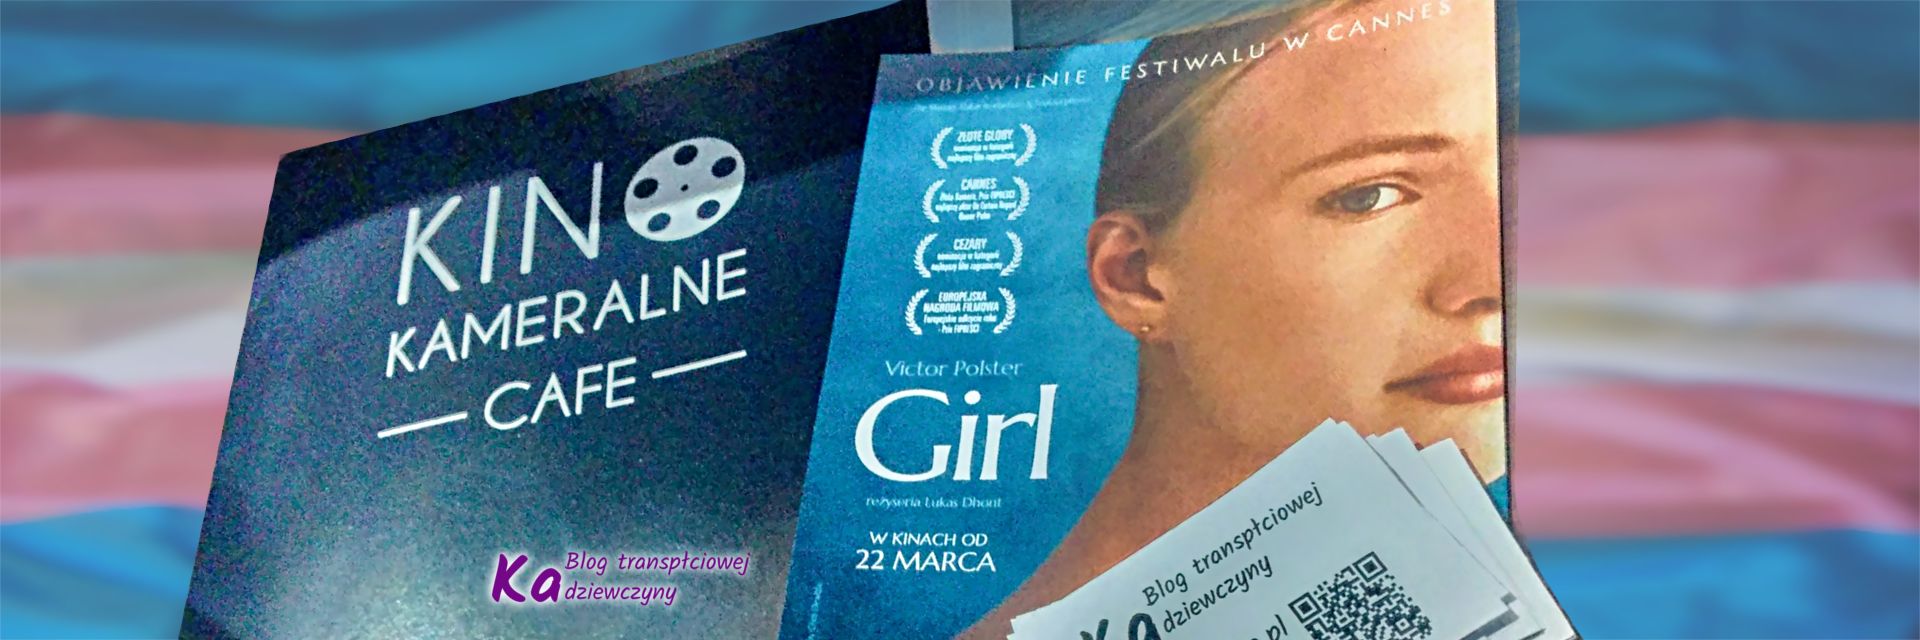 Film Girl z dyskusją, Gdańsk, Kino Kameralne Cafe, Tolerado, Ka